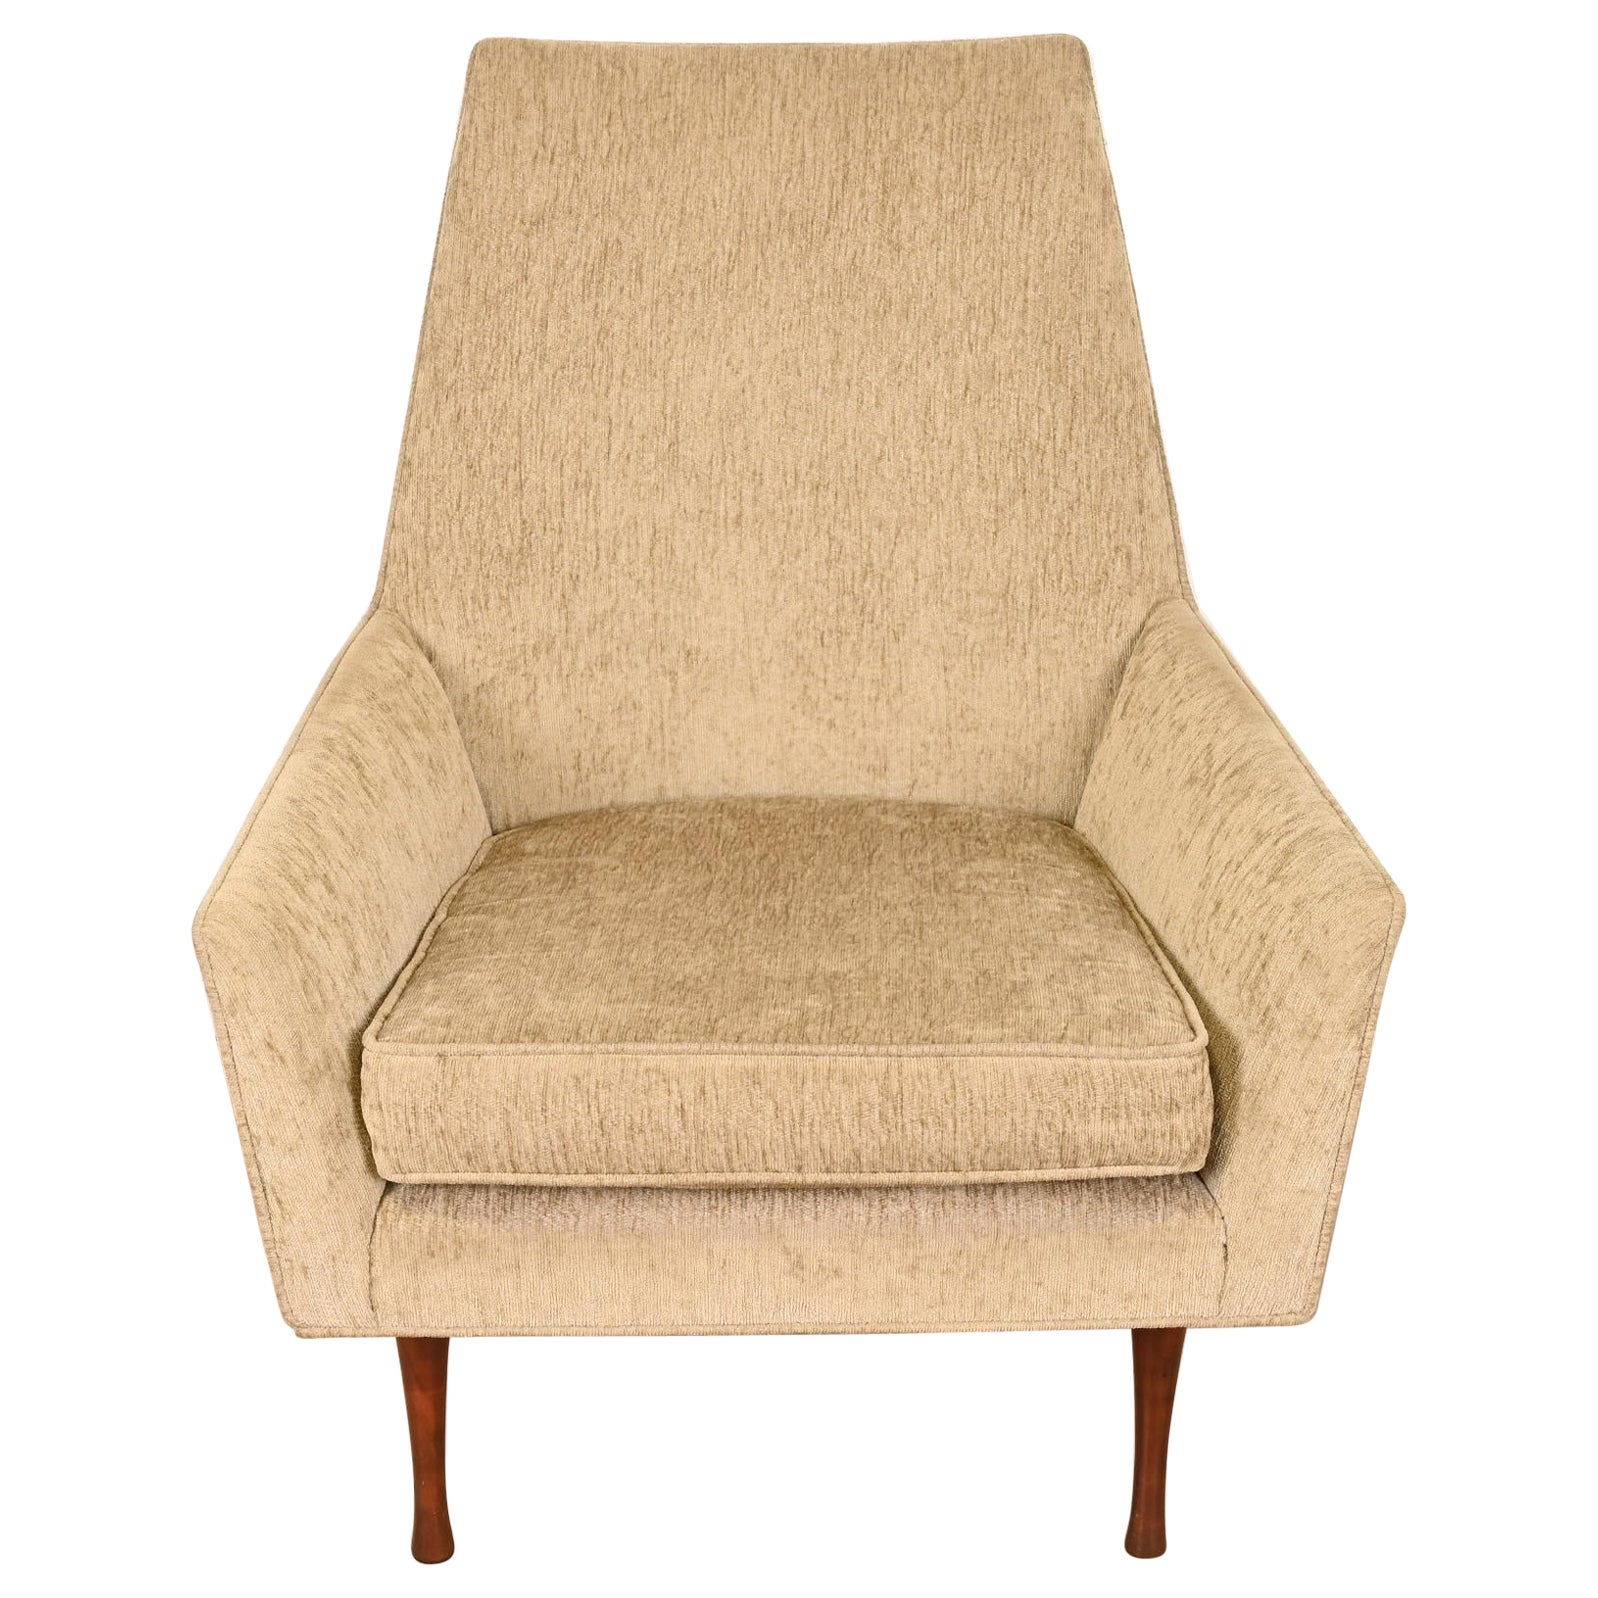 Paul McCobb for Widdicomb Symmetric Group Mid-Century Modern Lounge Chair For Sale